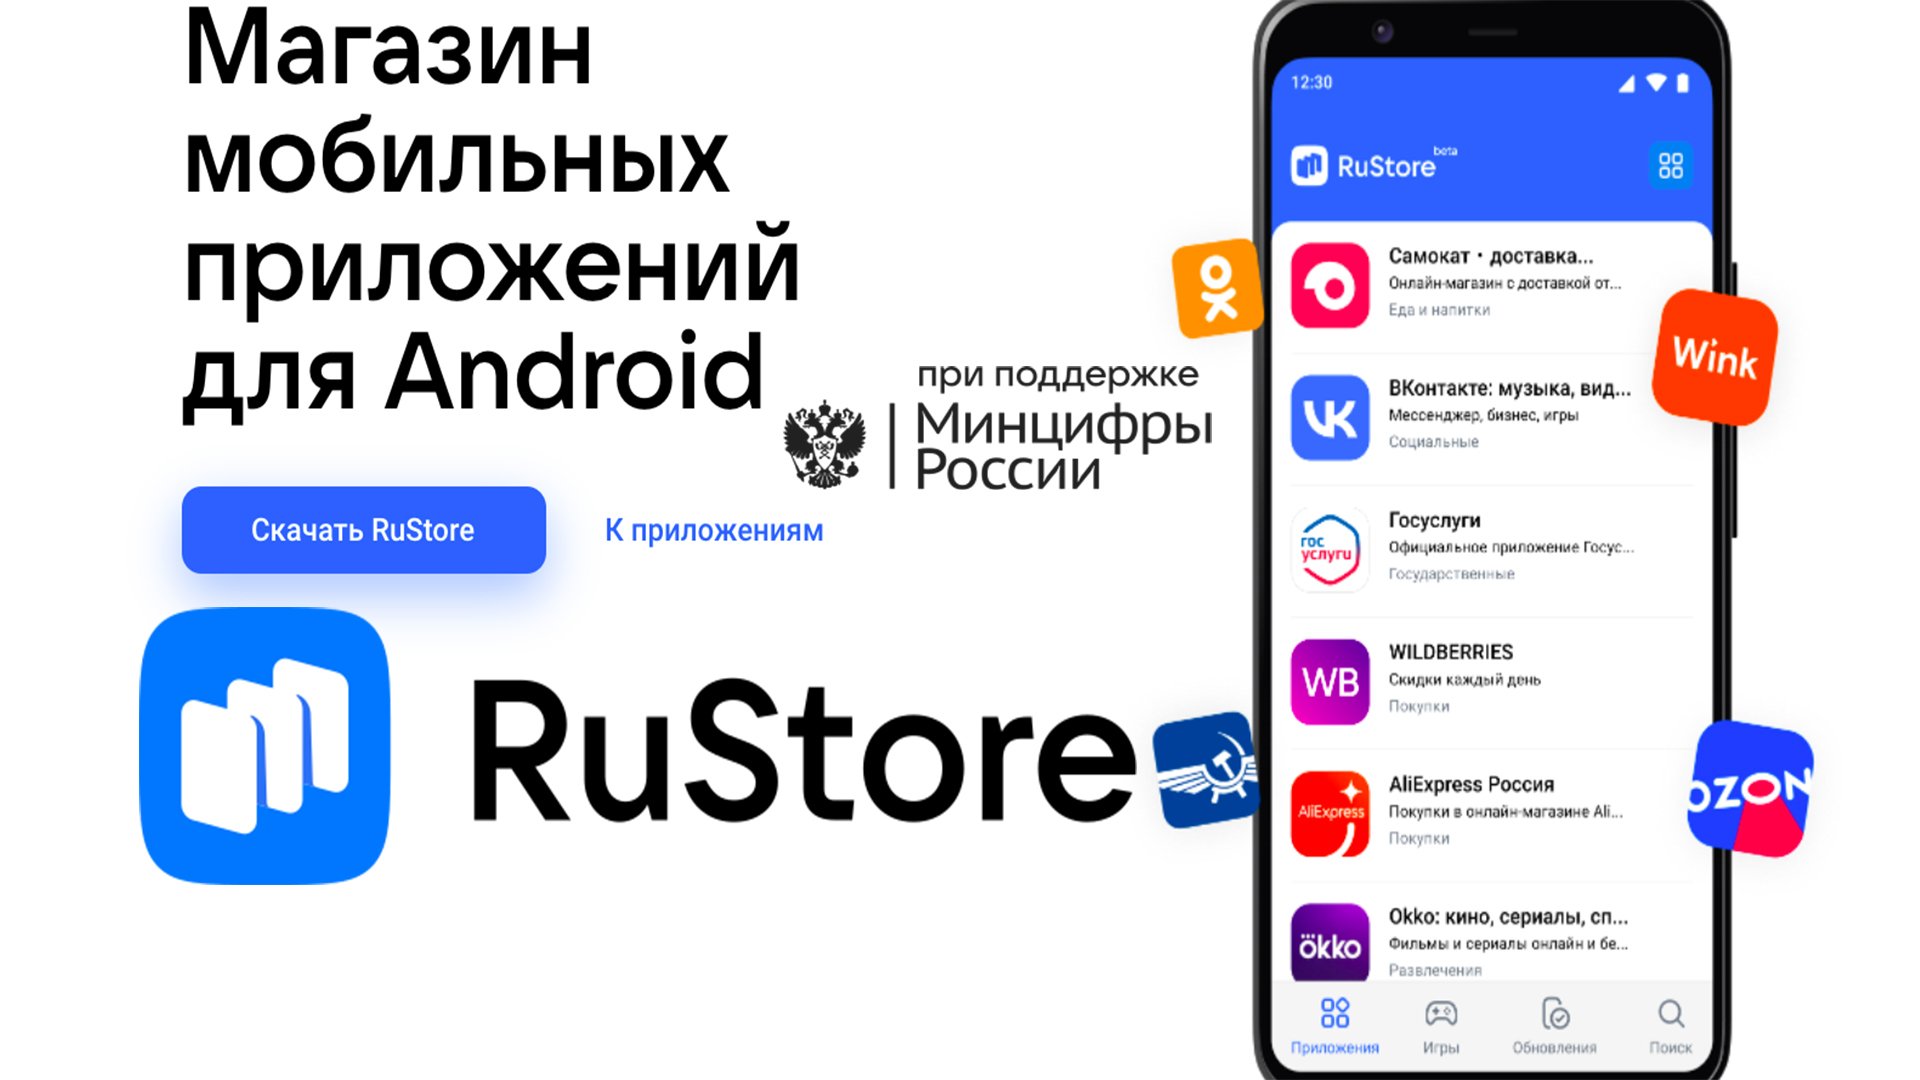 RuStore Магазин Мобильных Приложений для ANDROID